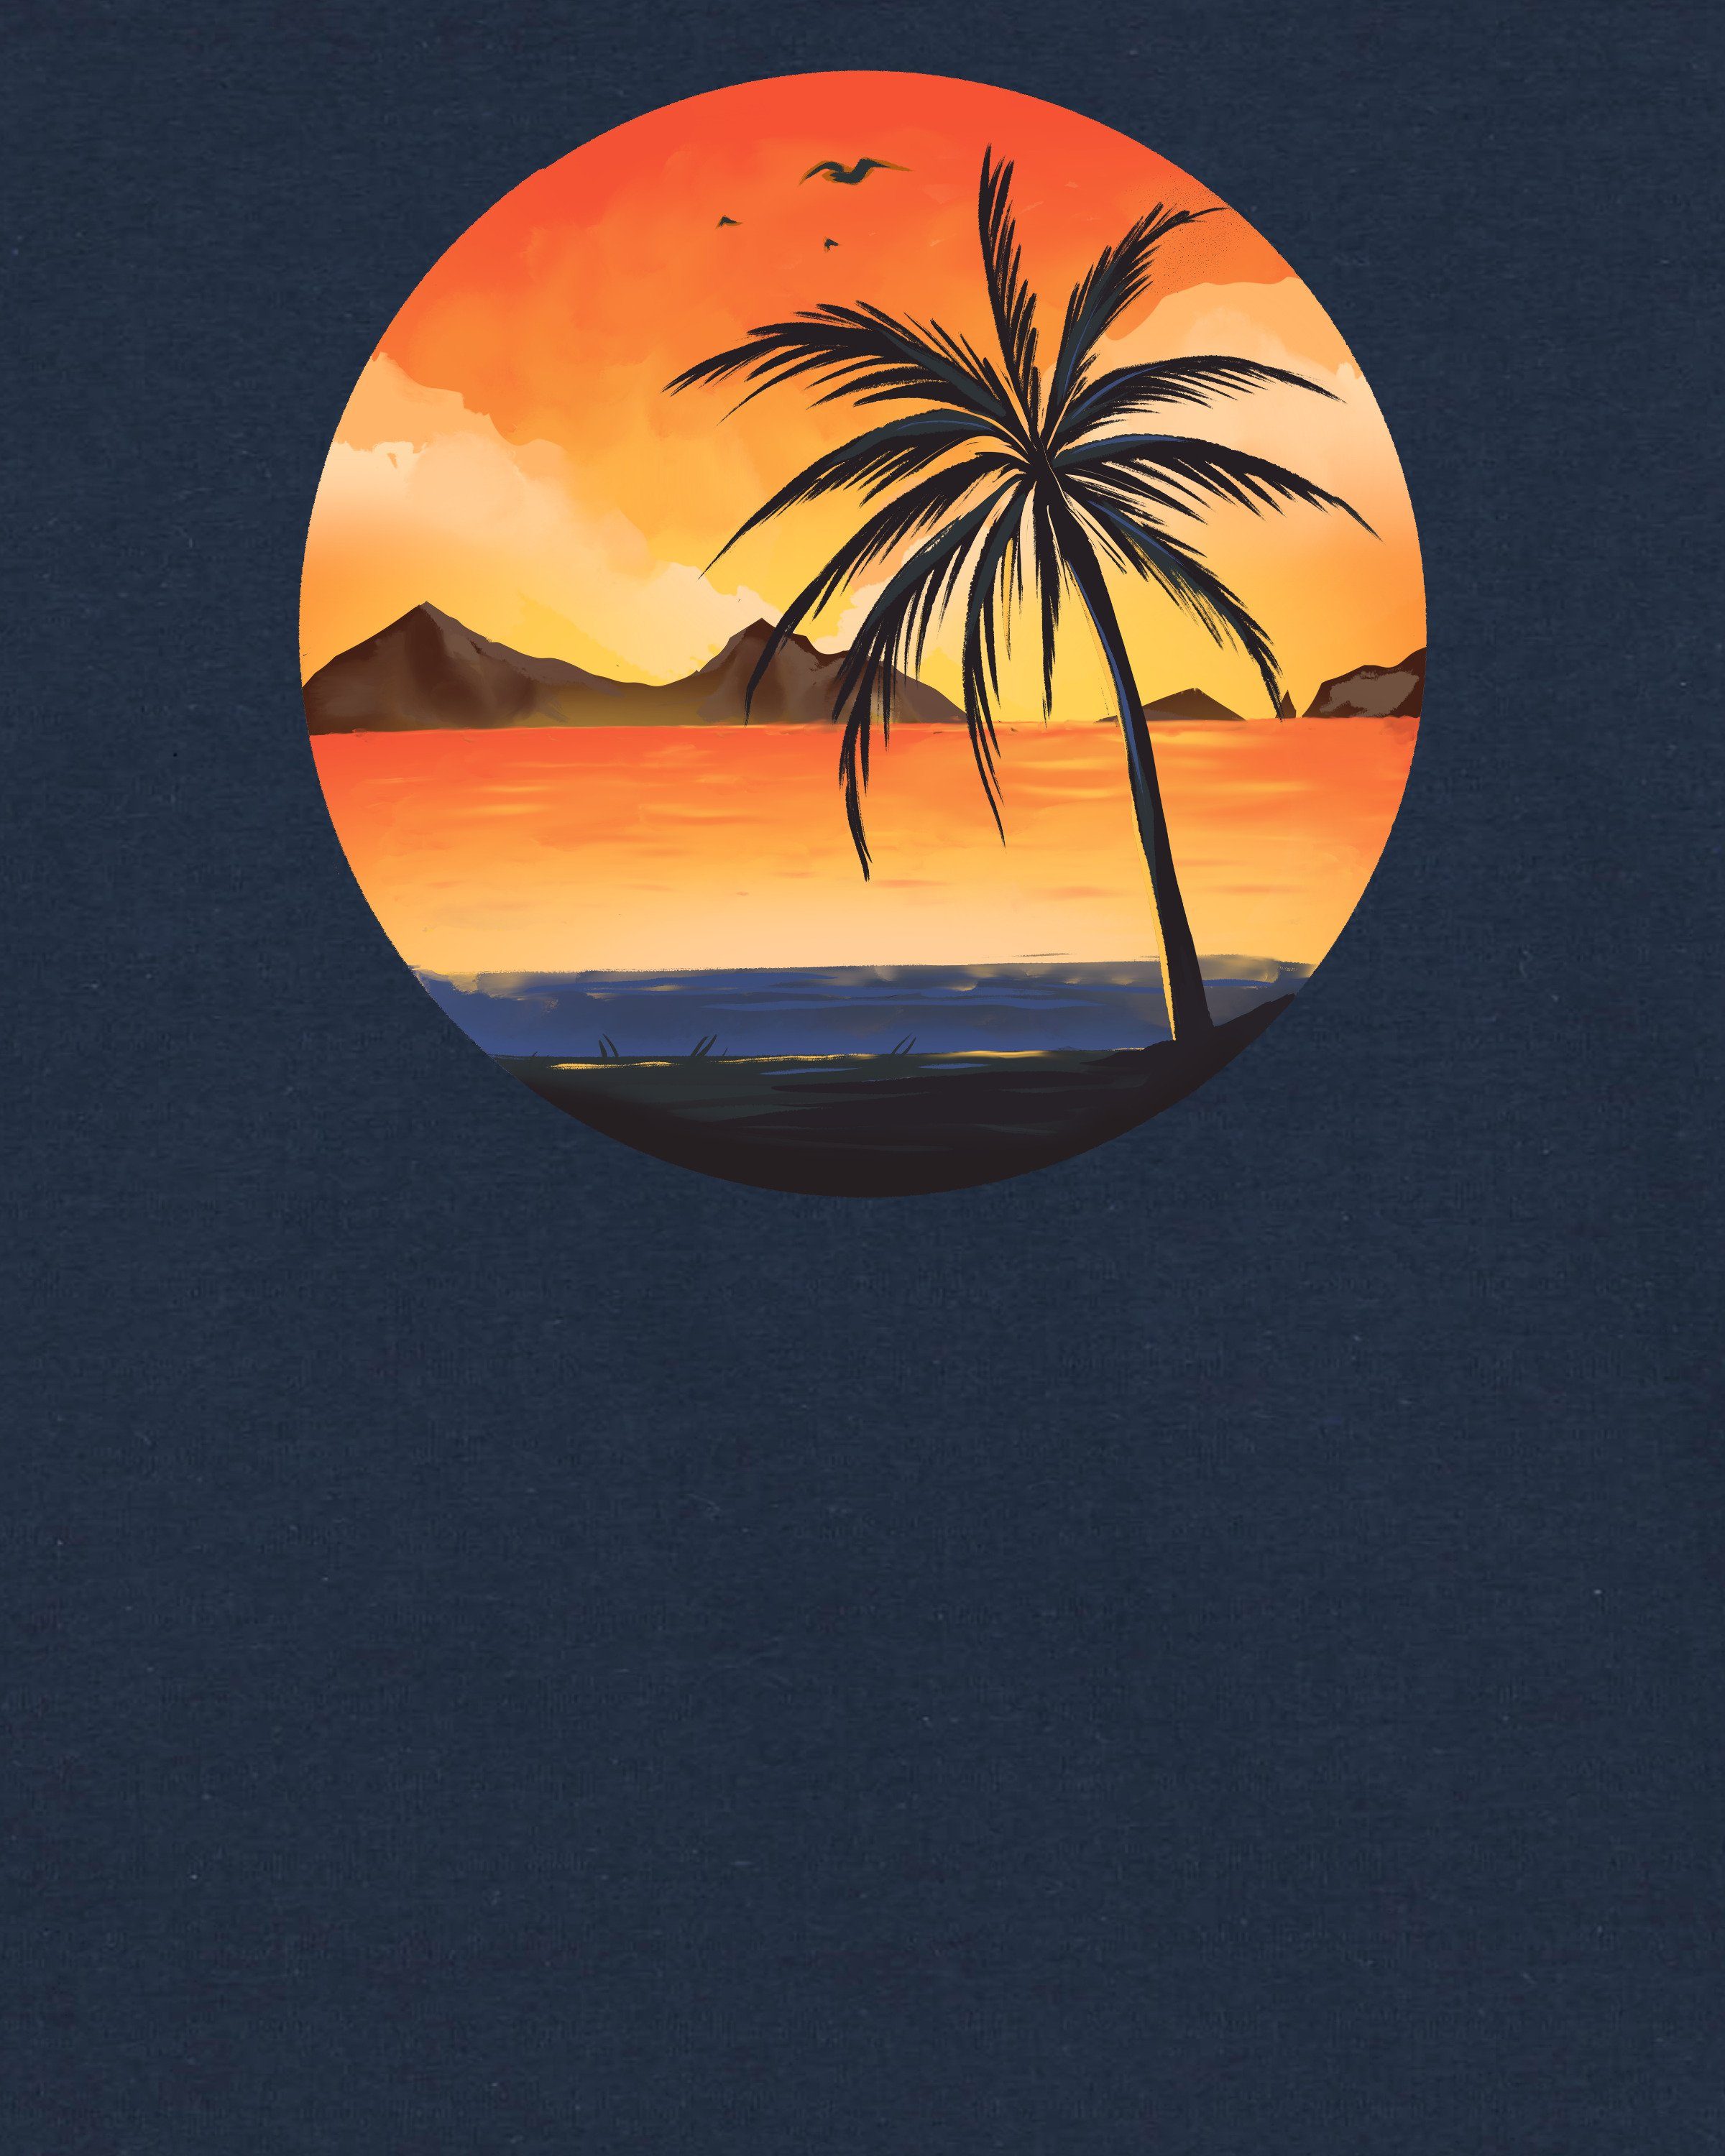 wat? Apparel Print-Shirt Sunset on (1-tlg) palm beach dunkelblau